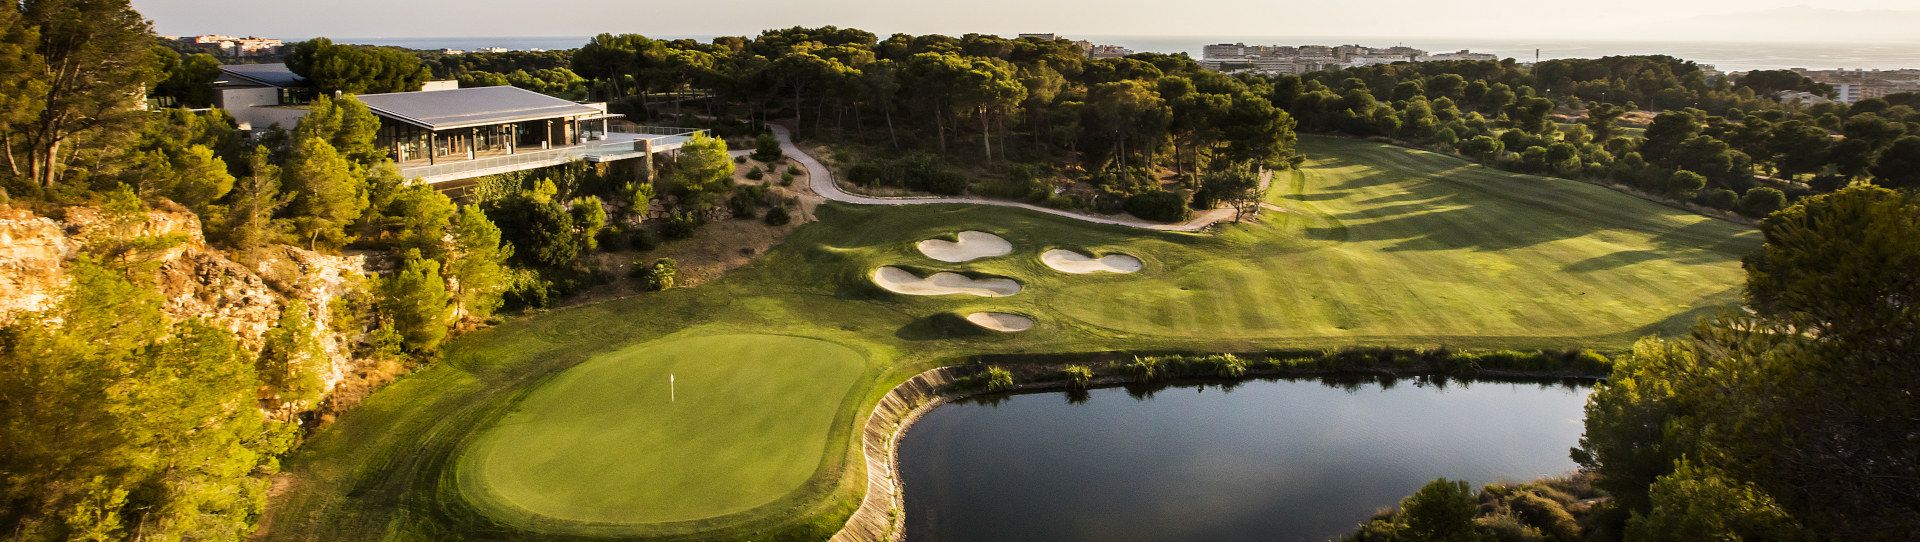 Spain golf courses - Infinitum Hills (Ex Lumine) - Photo 1